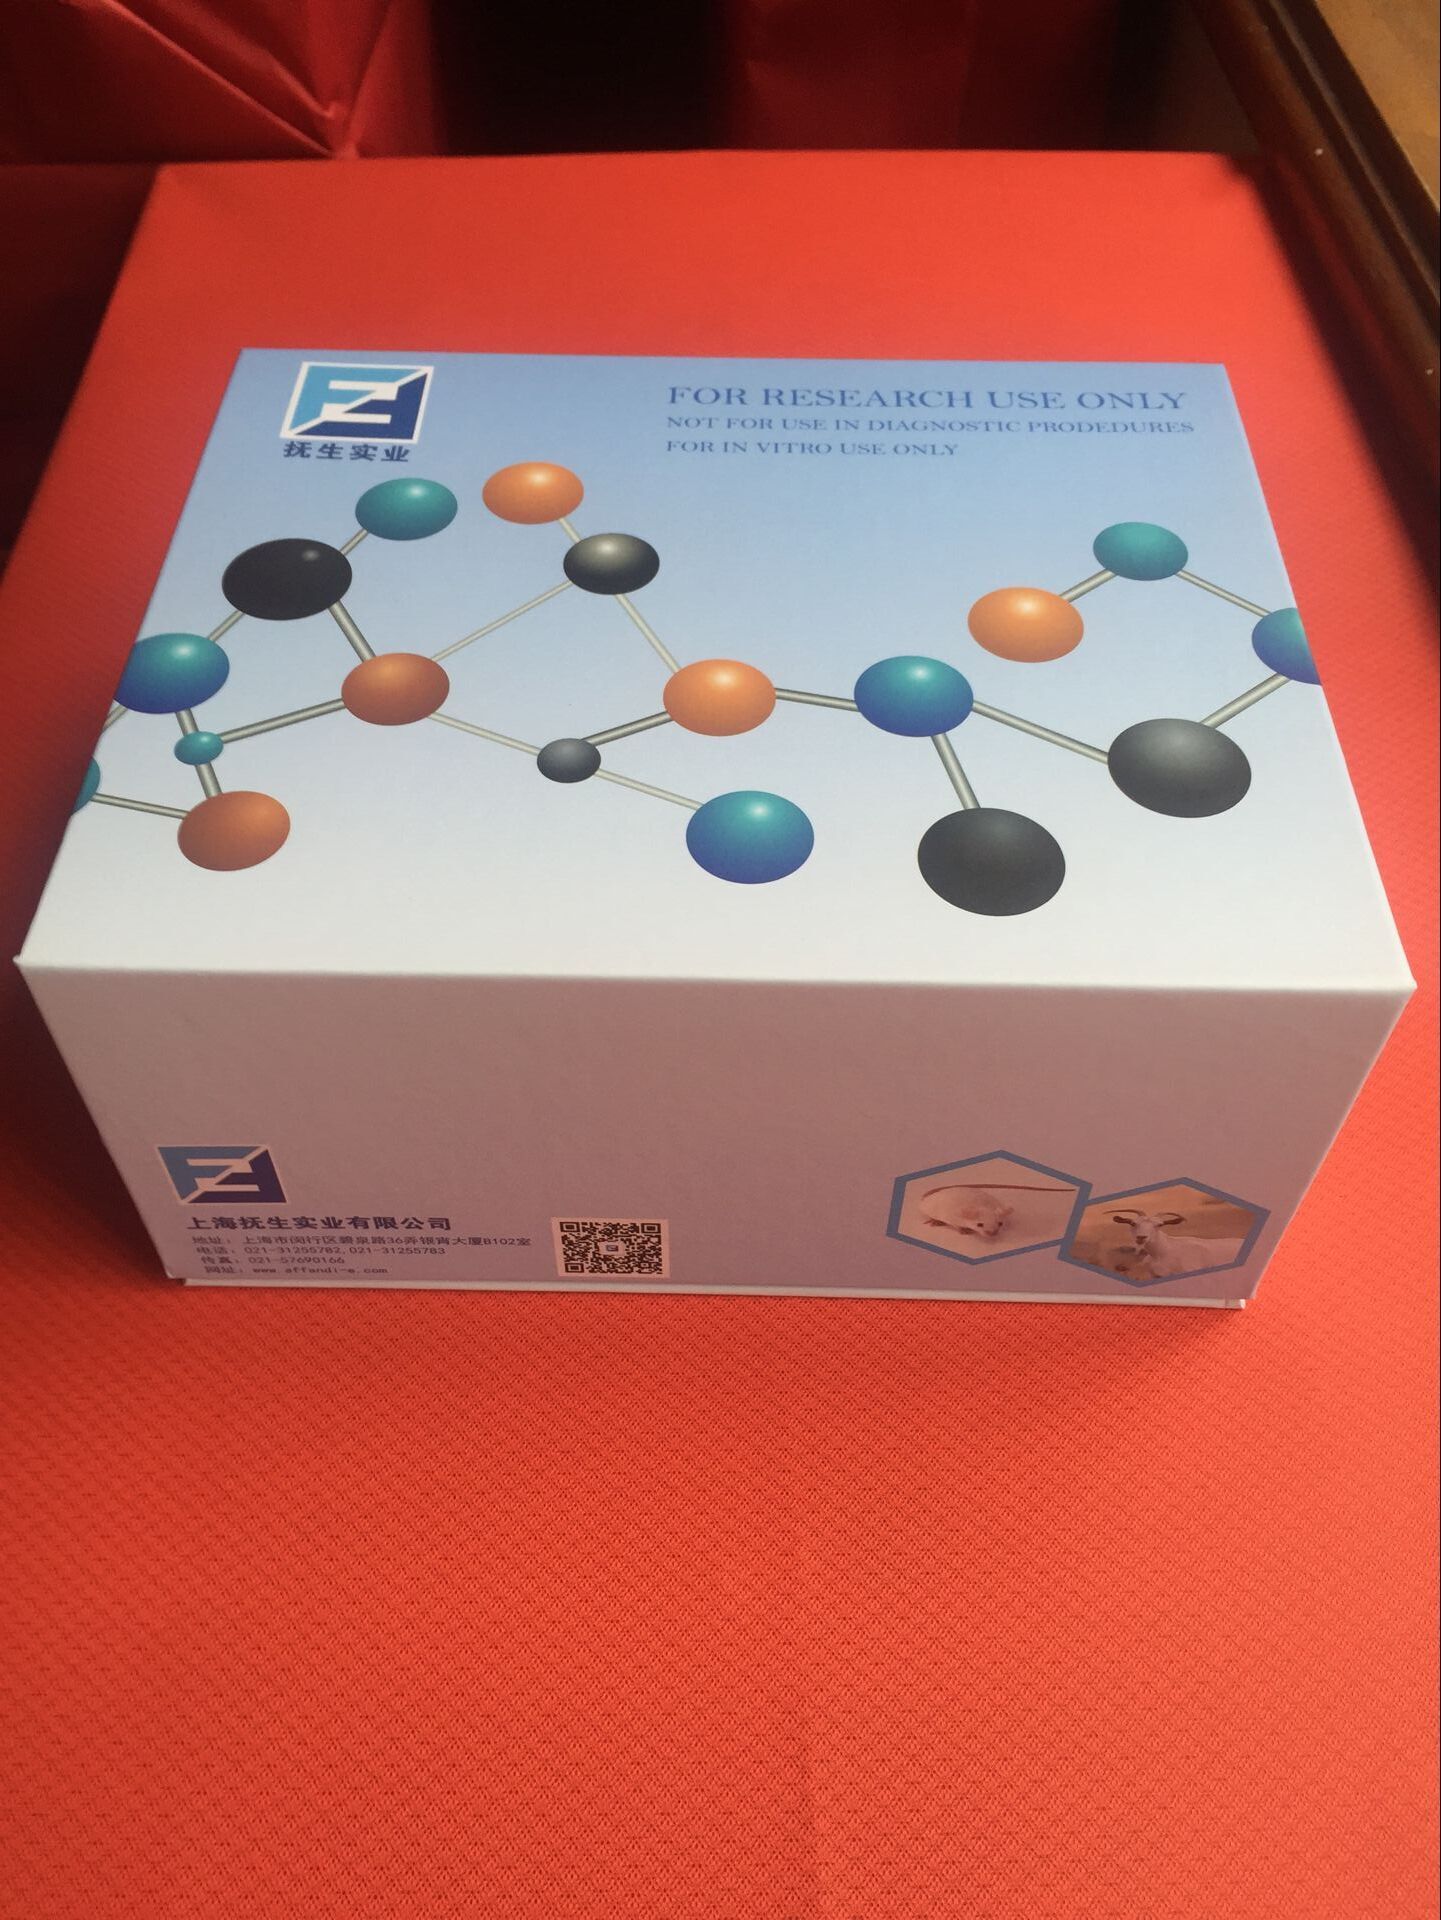 蛋白脂质蛋白抗体Elisa检测试剂盒说明书